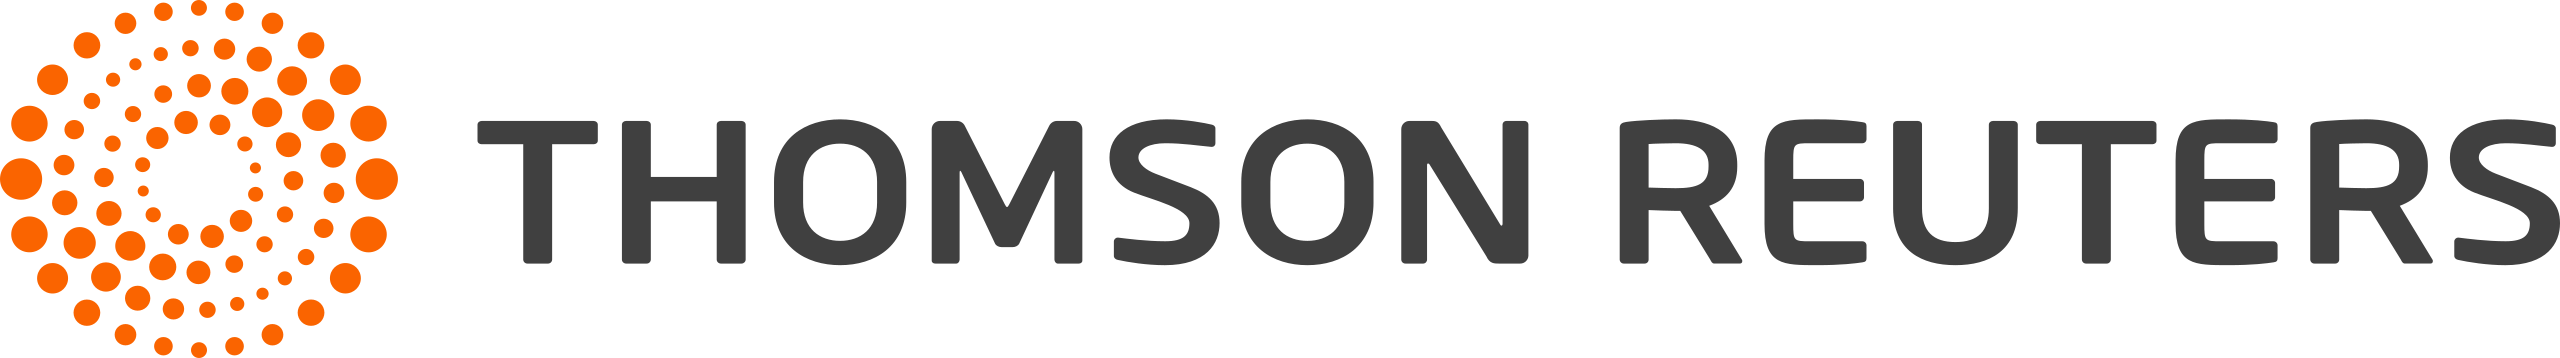 Thomson_Reuters_logo.svg